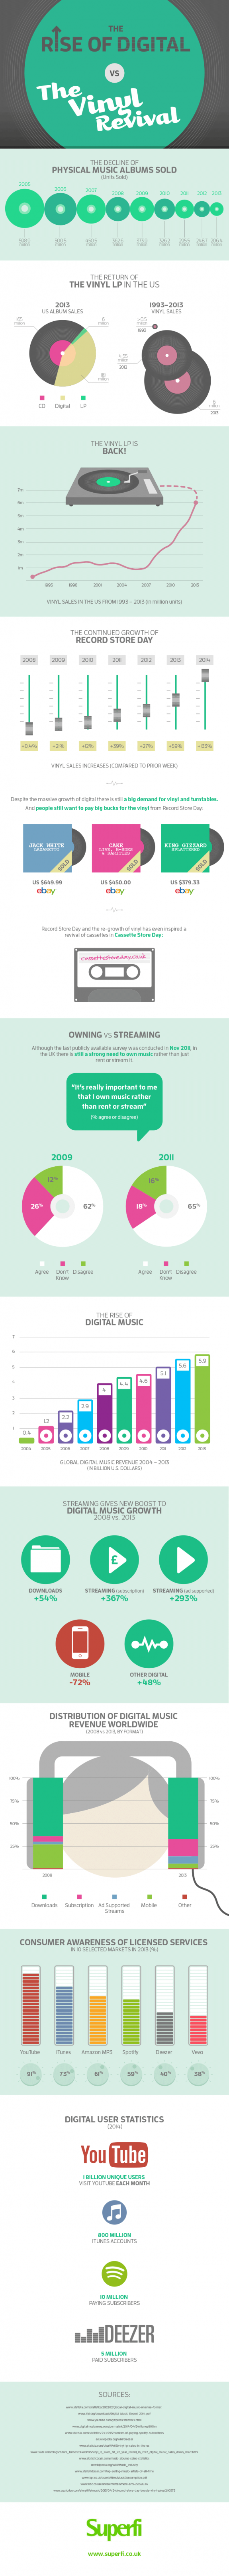 Music Production Evolution: The Rise Of Digital vs. The Vinyl Revival